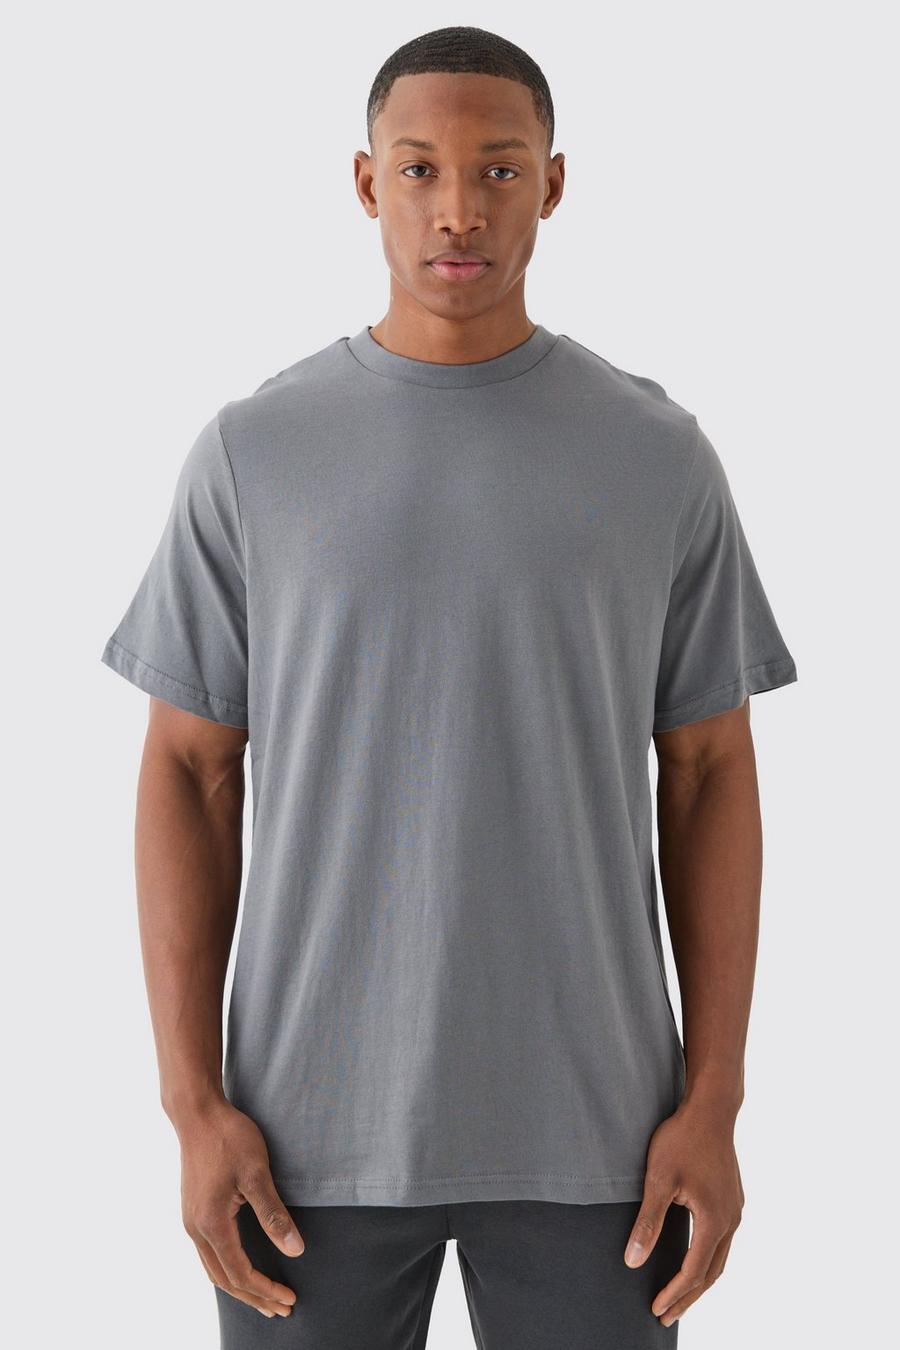 Charcoal grau Basic Crew Neck T-shirt